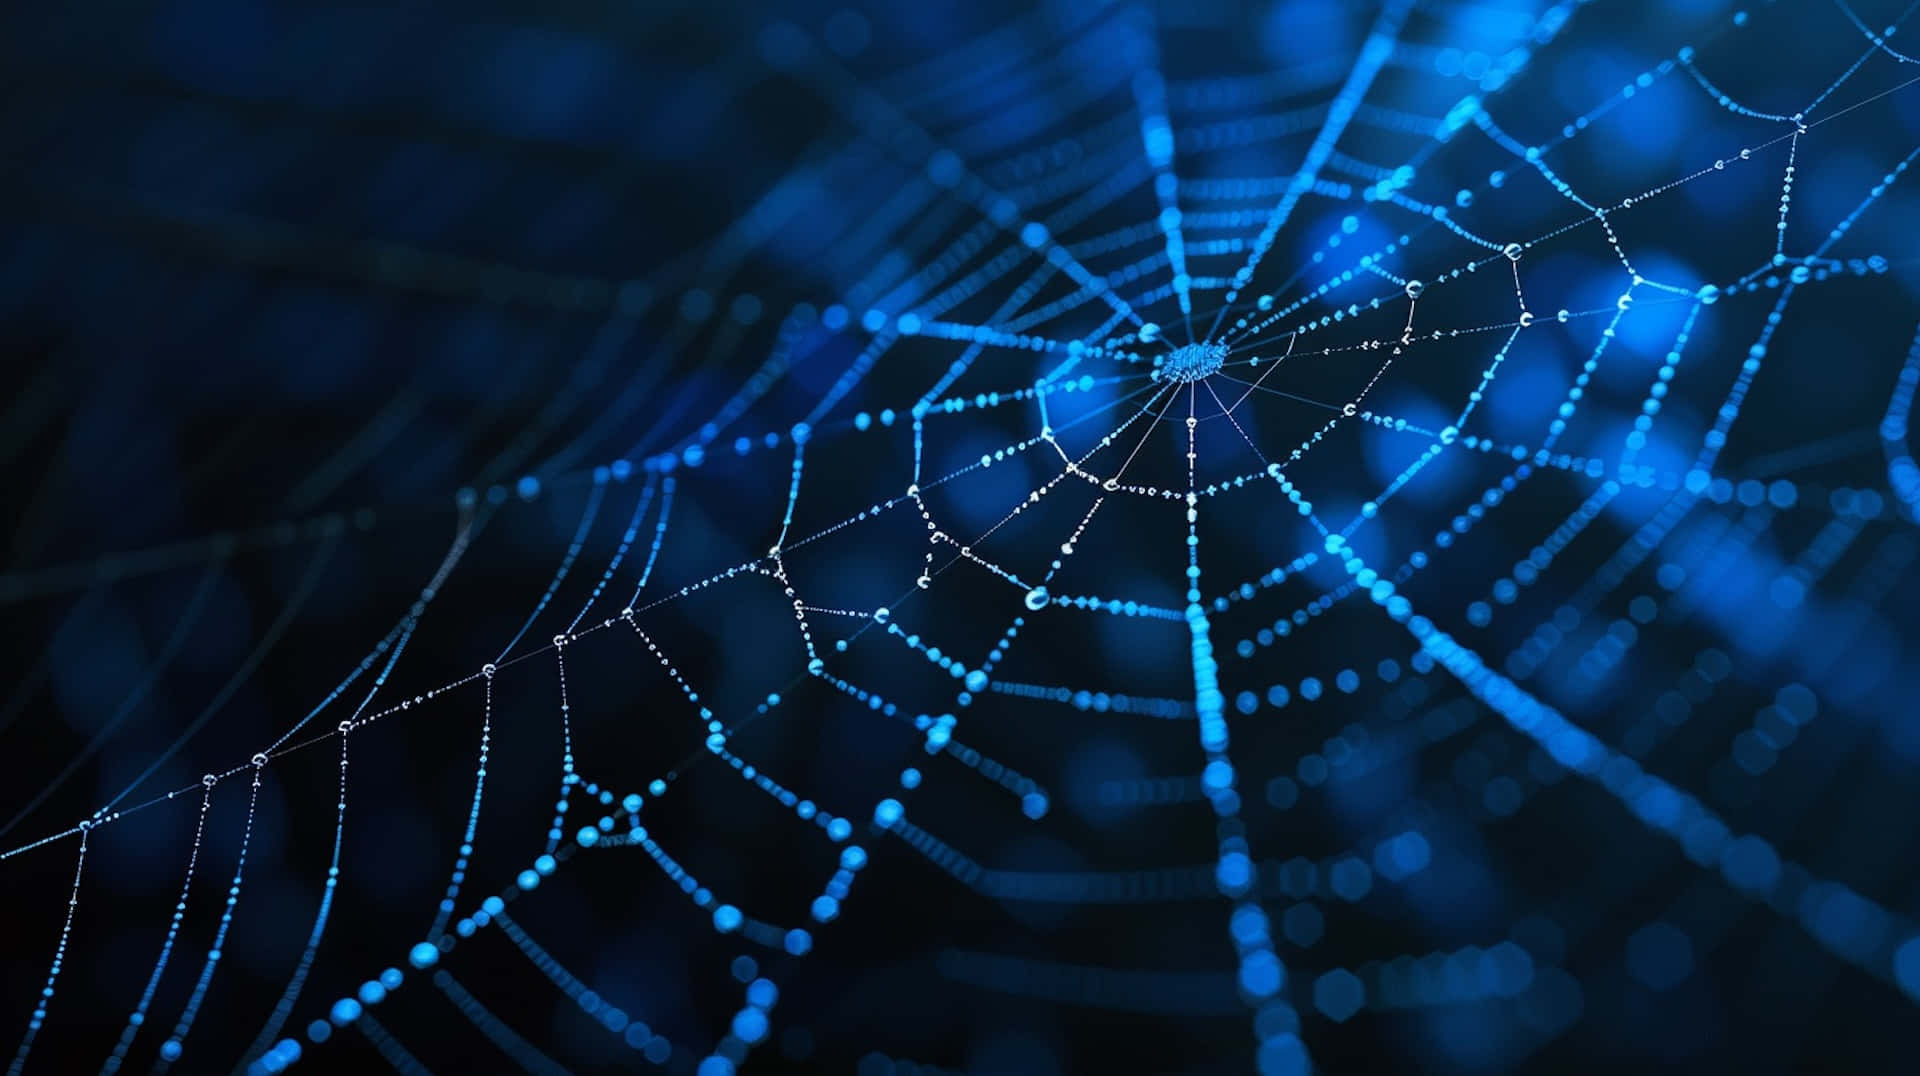 Glowing Spider Web Network Wallpaper